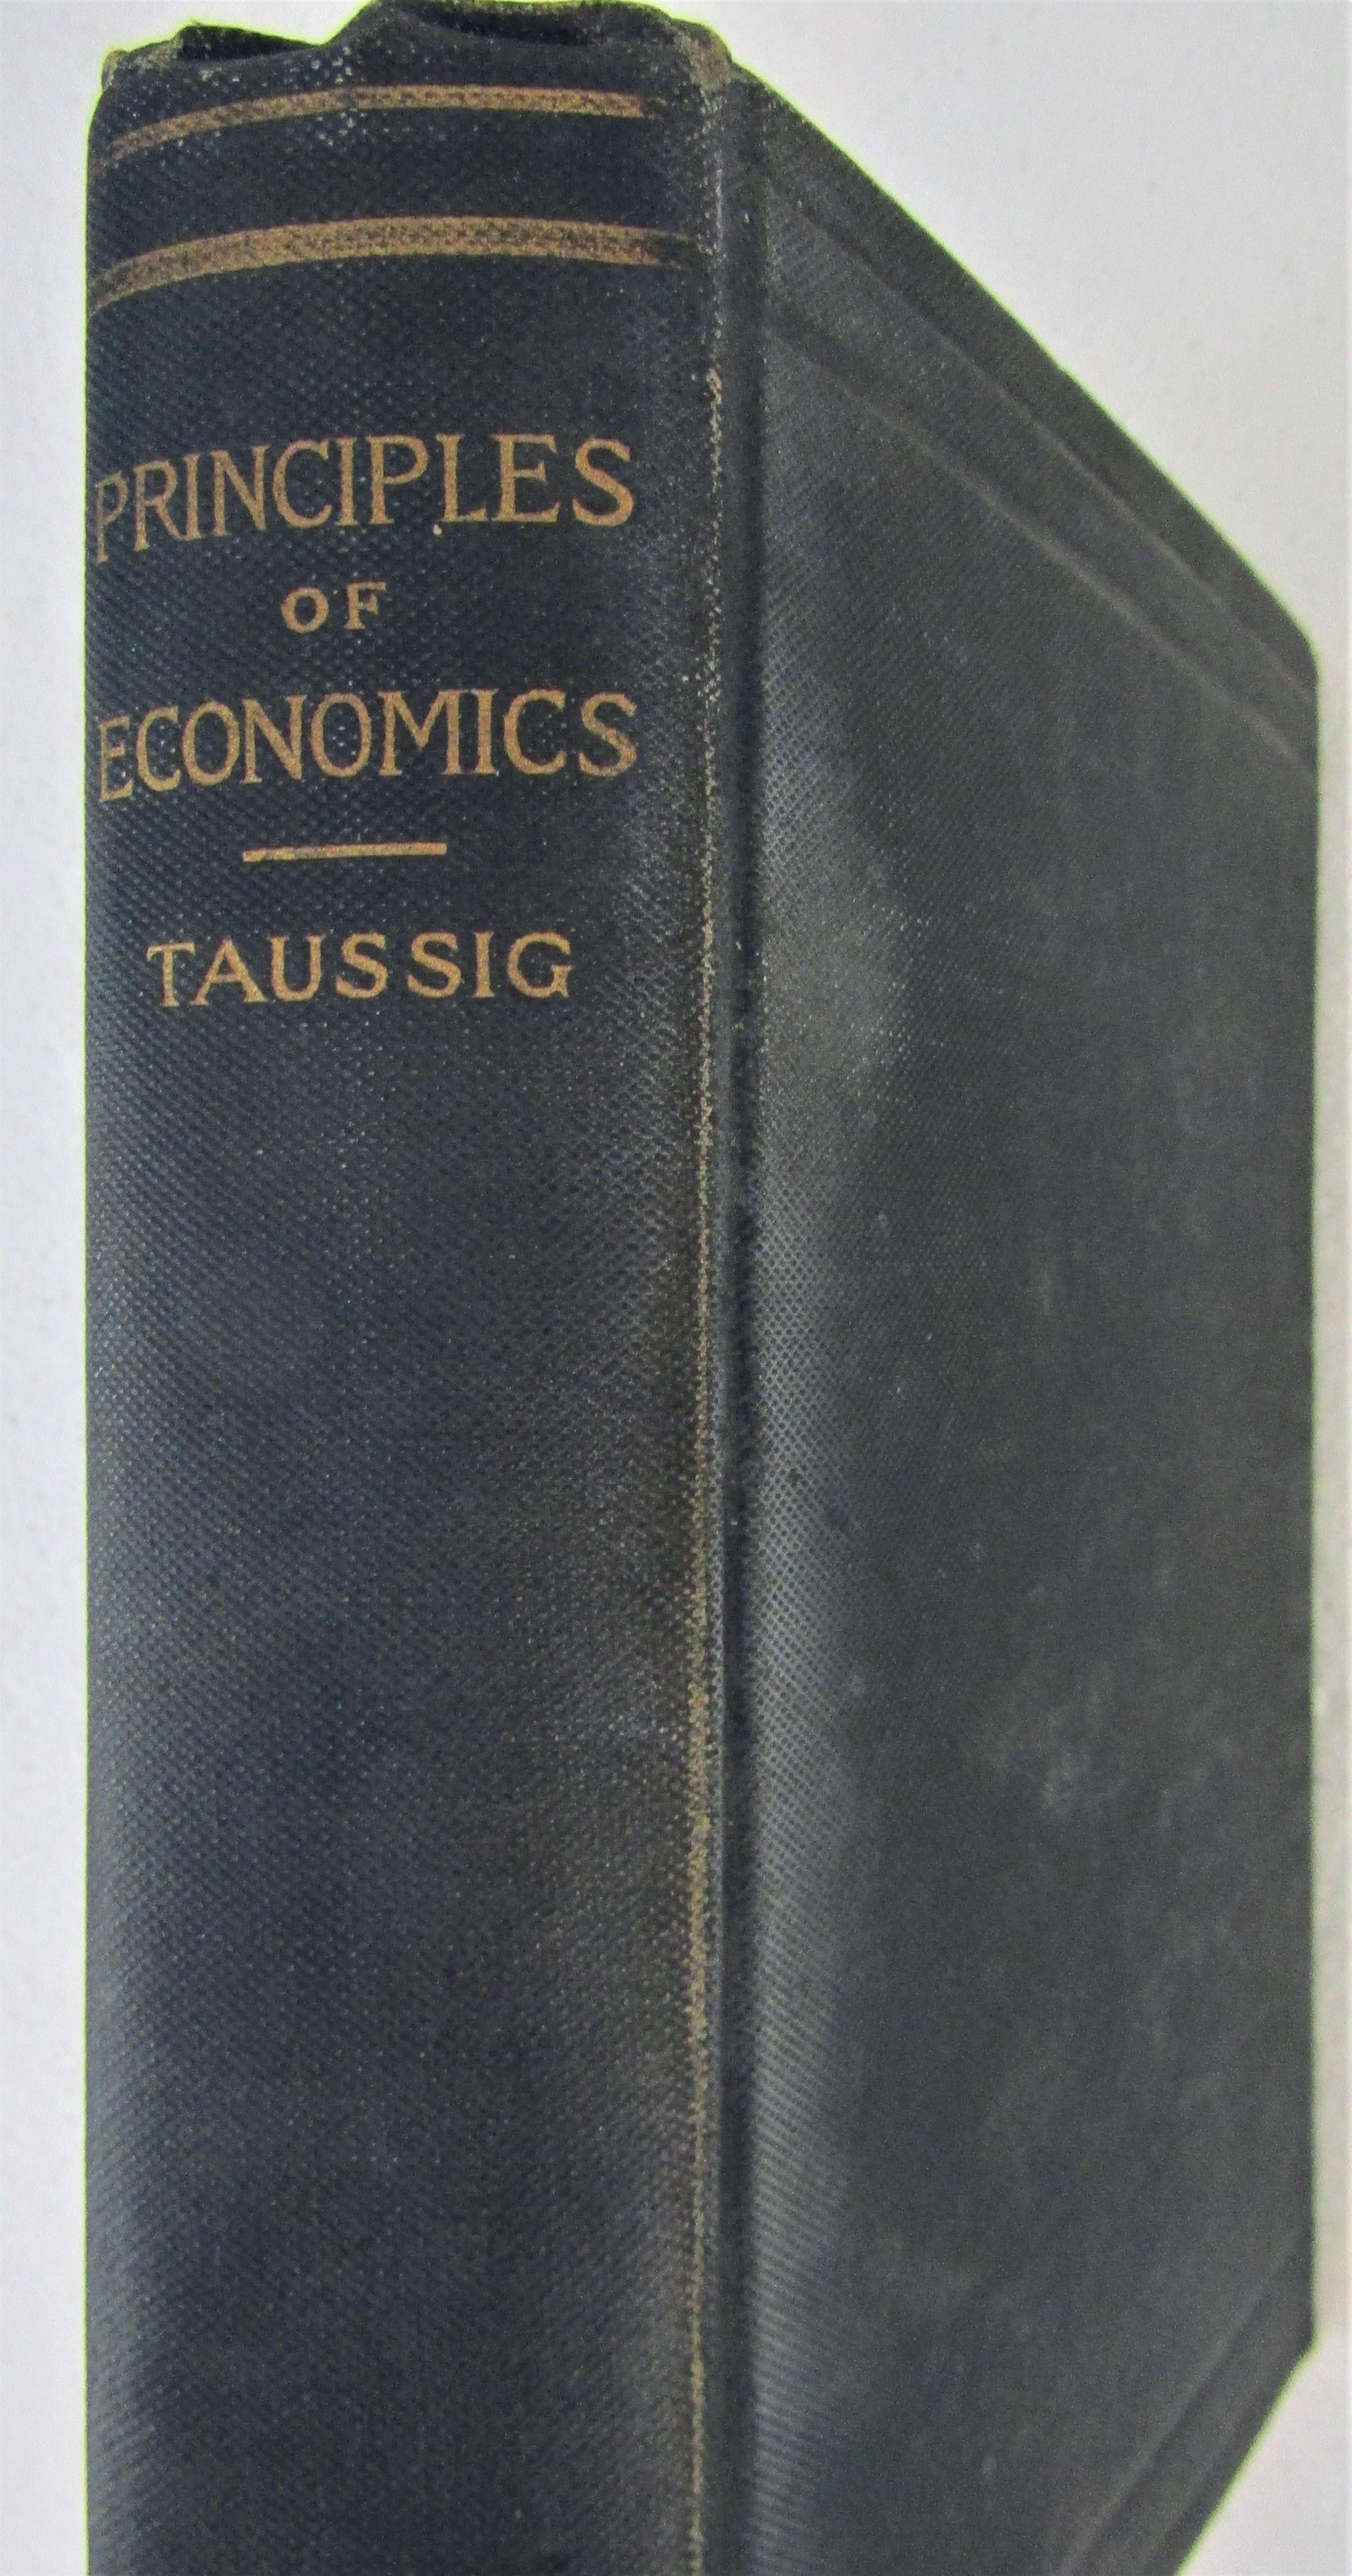 Principles of Economics, Volume II - Taussig, F.W.